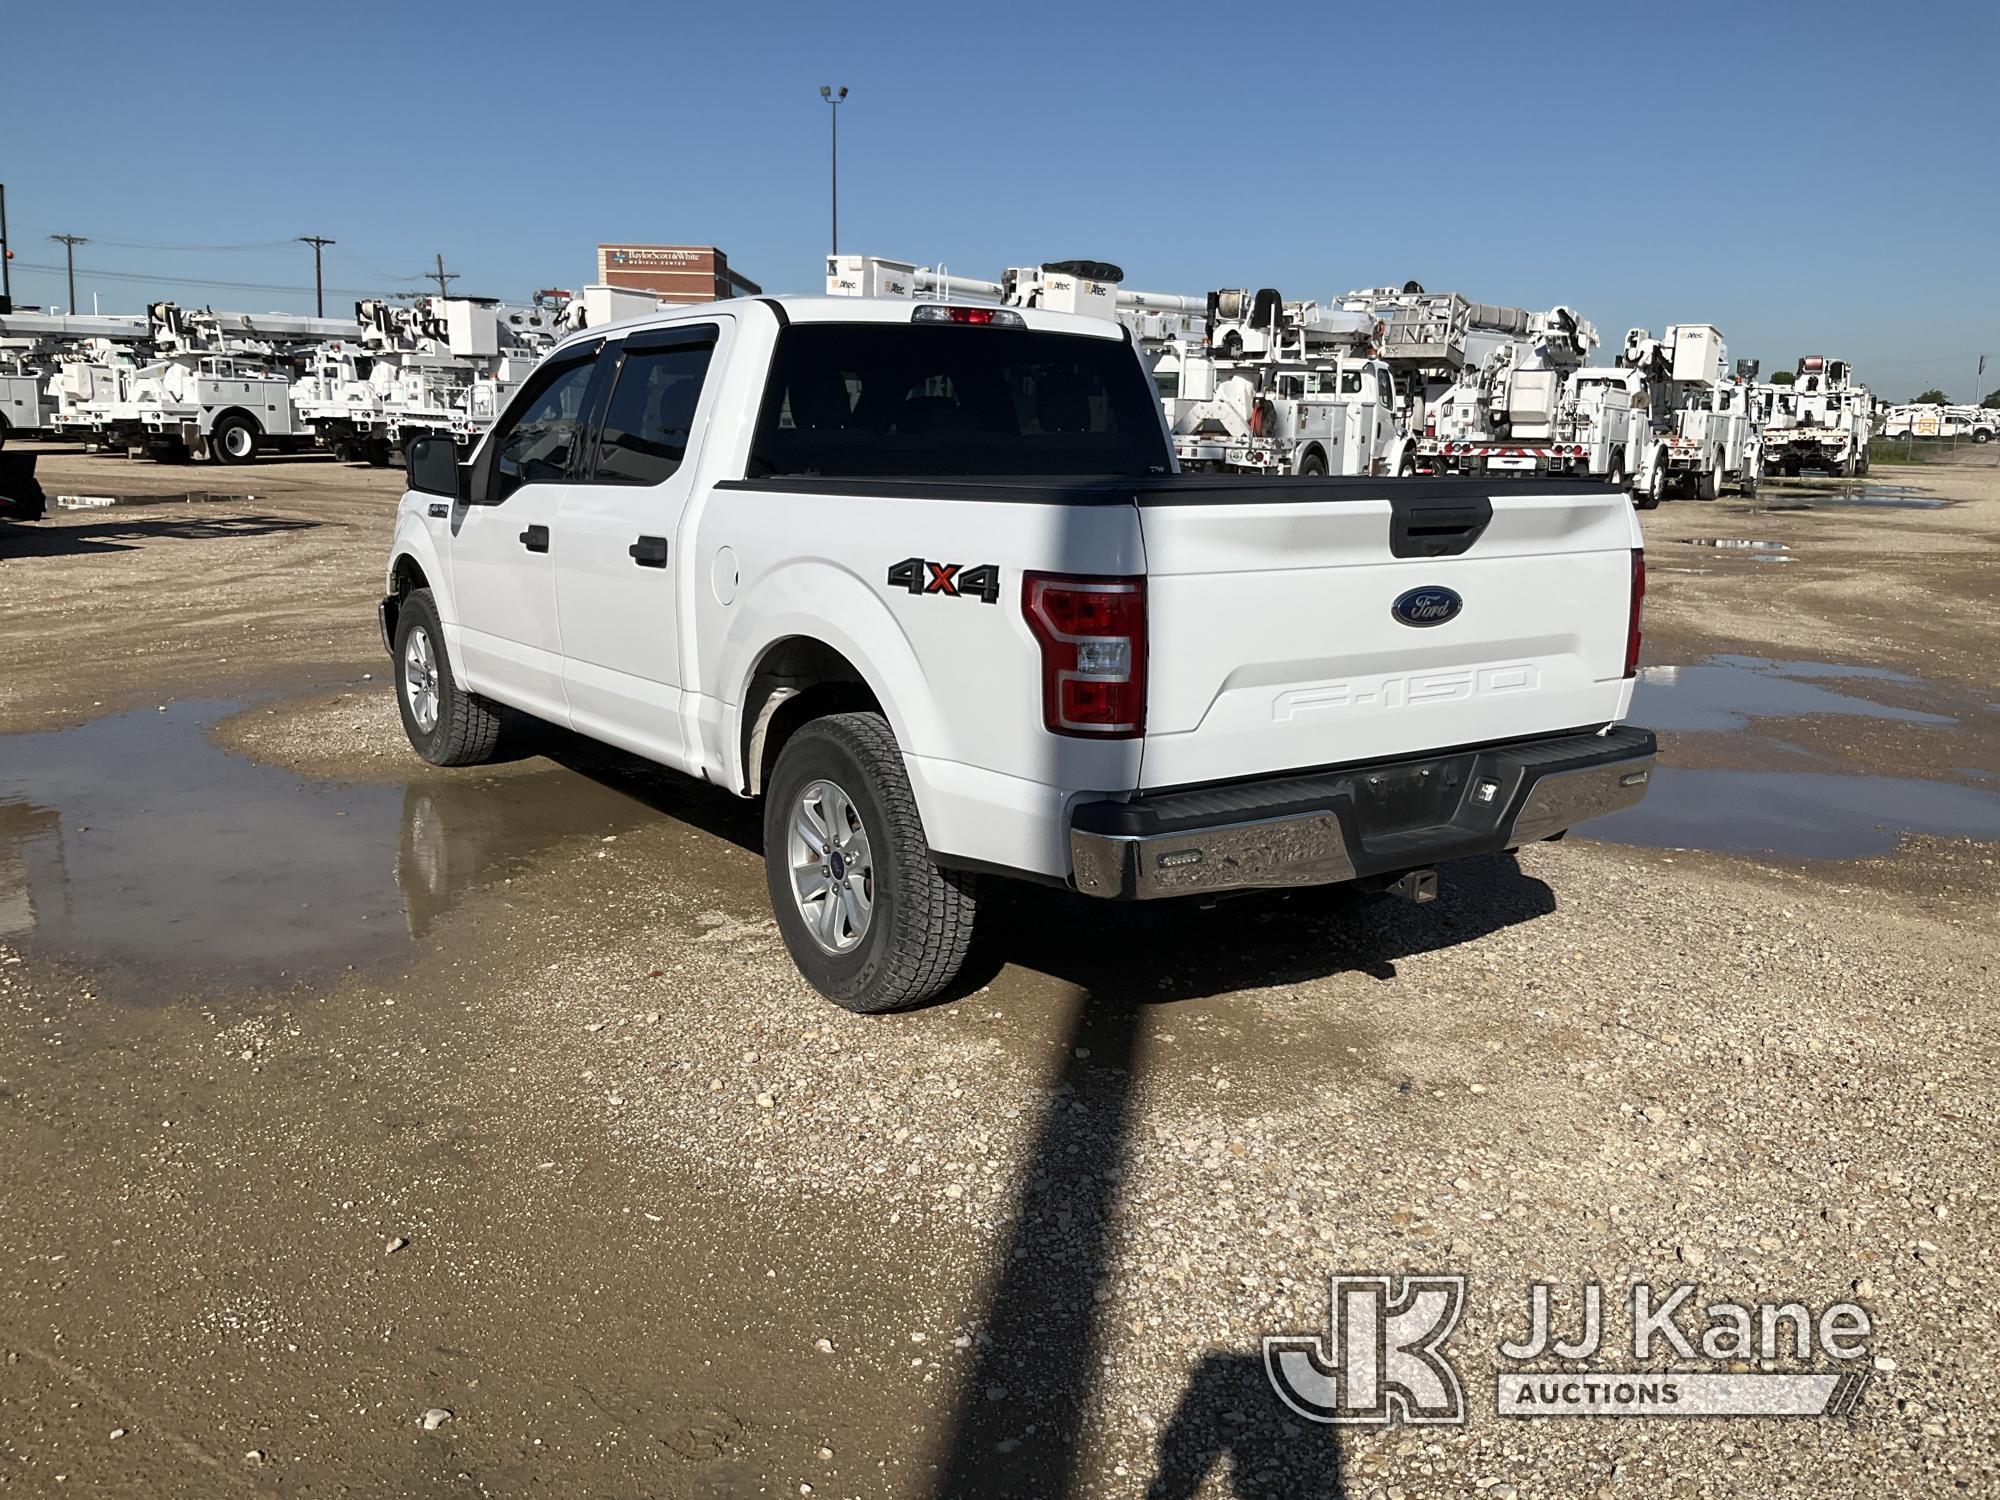 (Waxahachie, TX) 2018 Ford F150 4x4 Crew-Cab Pickup Truck Has Key, Starts, Wrecked